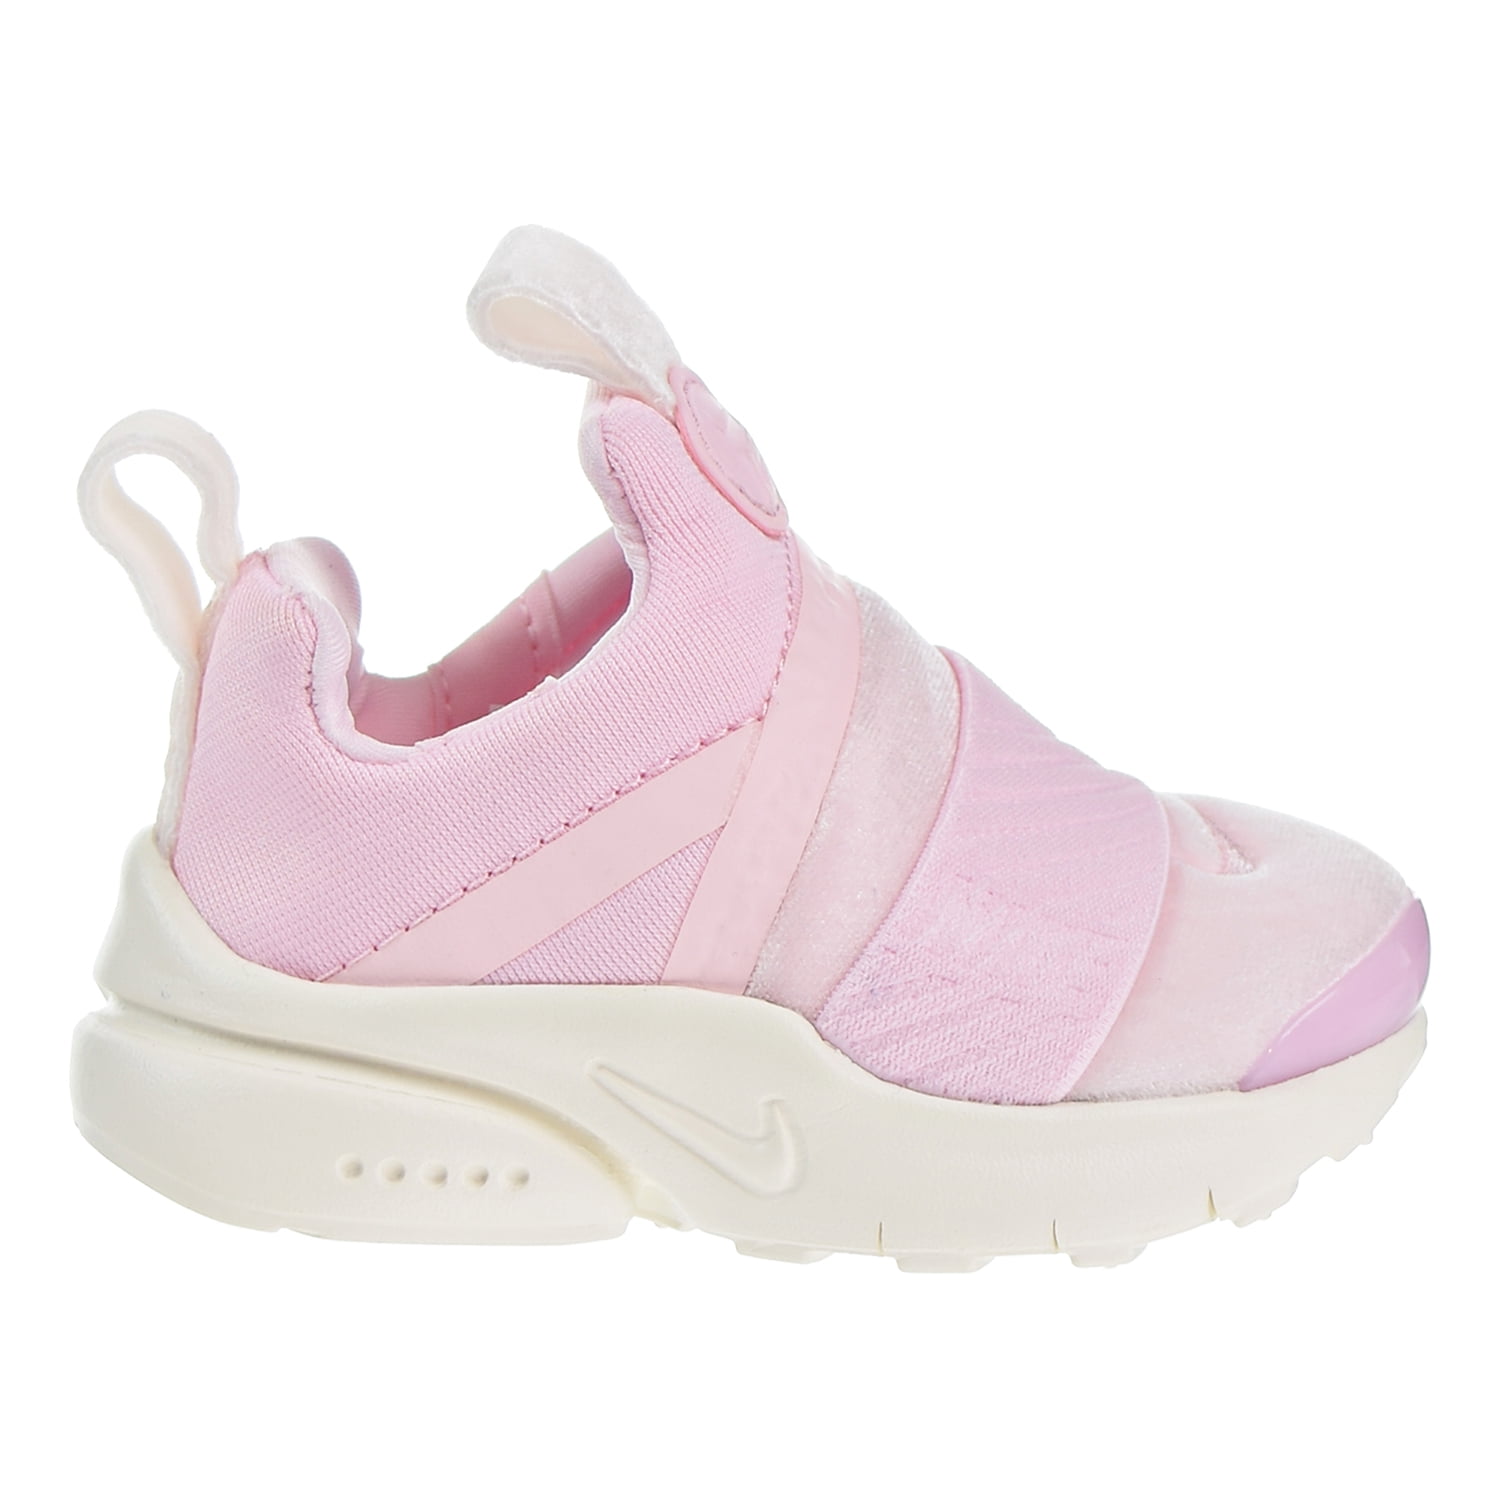 Nike Presto Extreme SE Toddler's Shoes Arctic Pink/White aa3514-600 ...